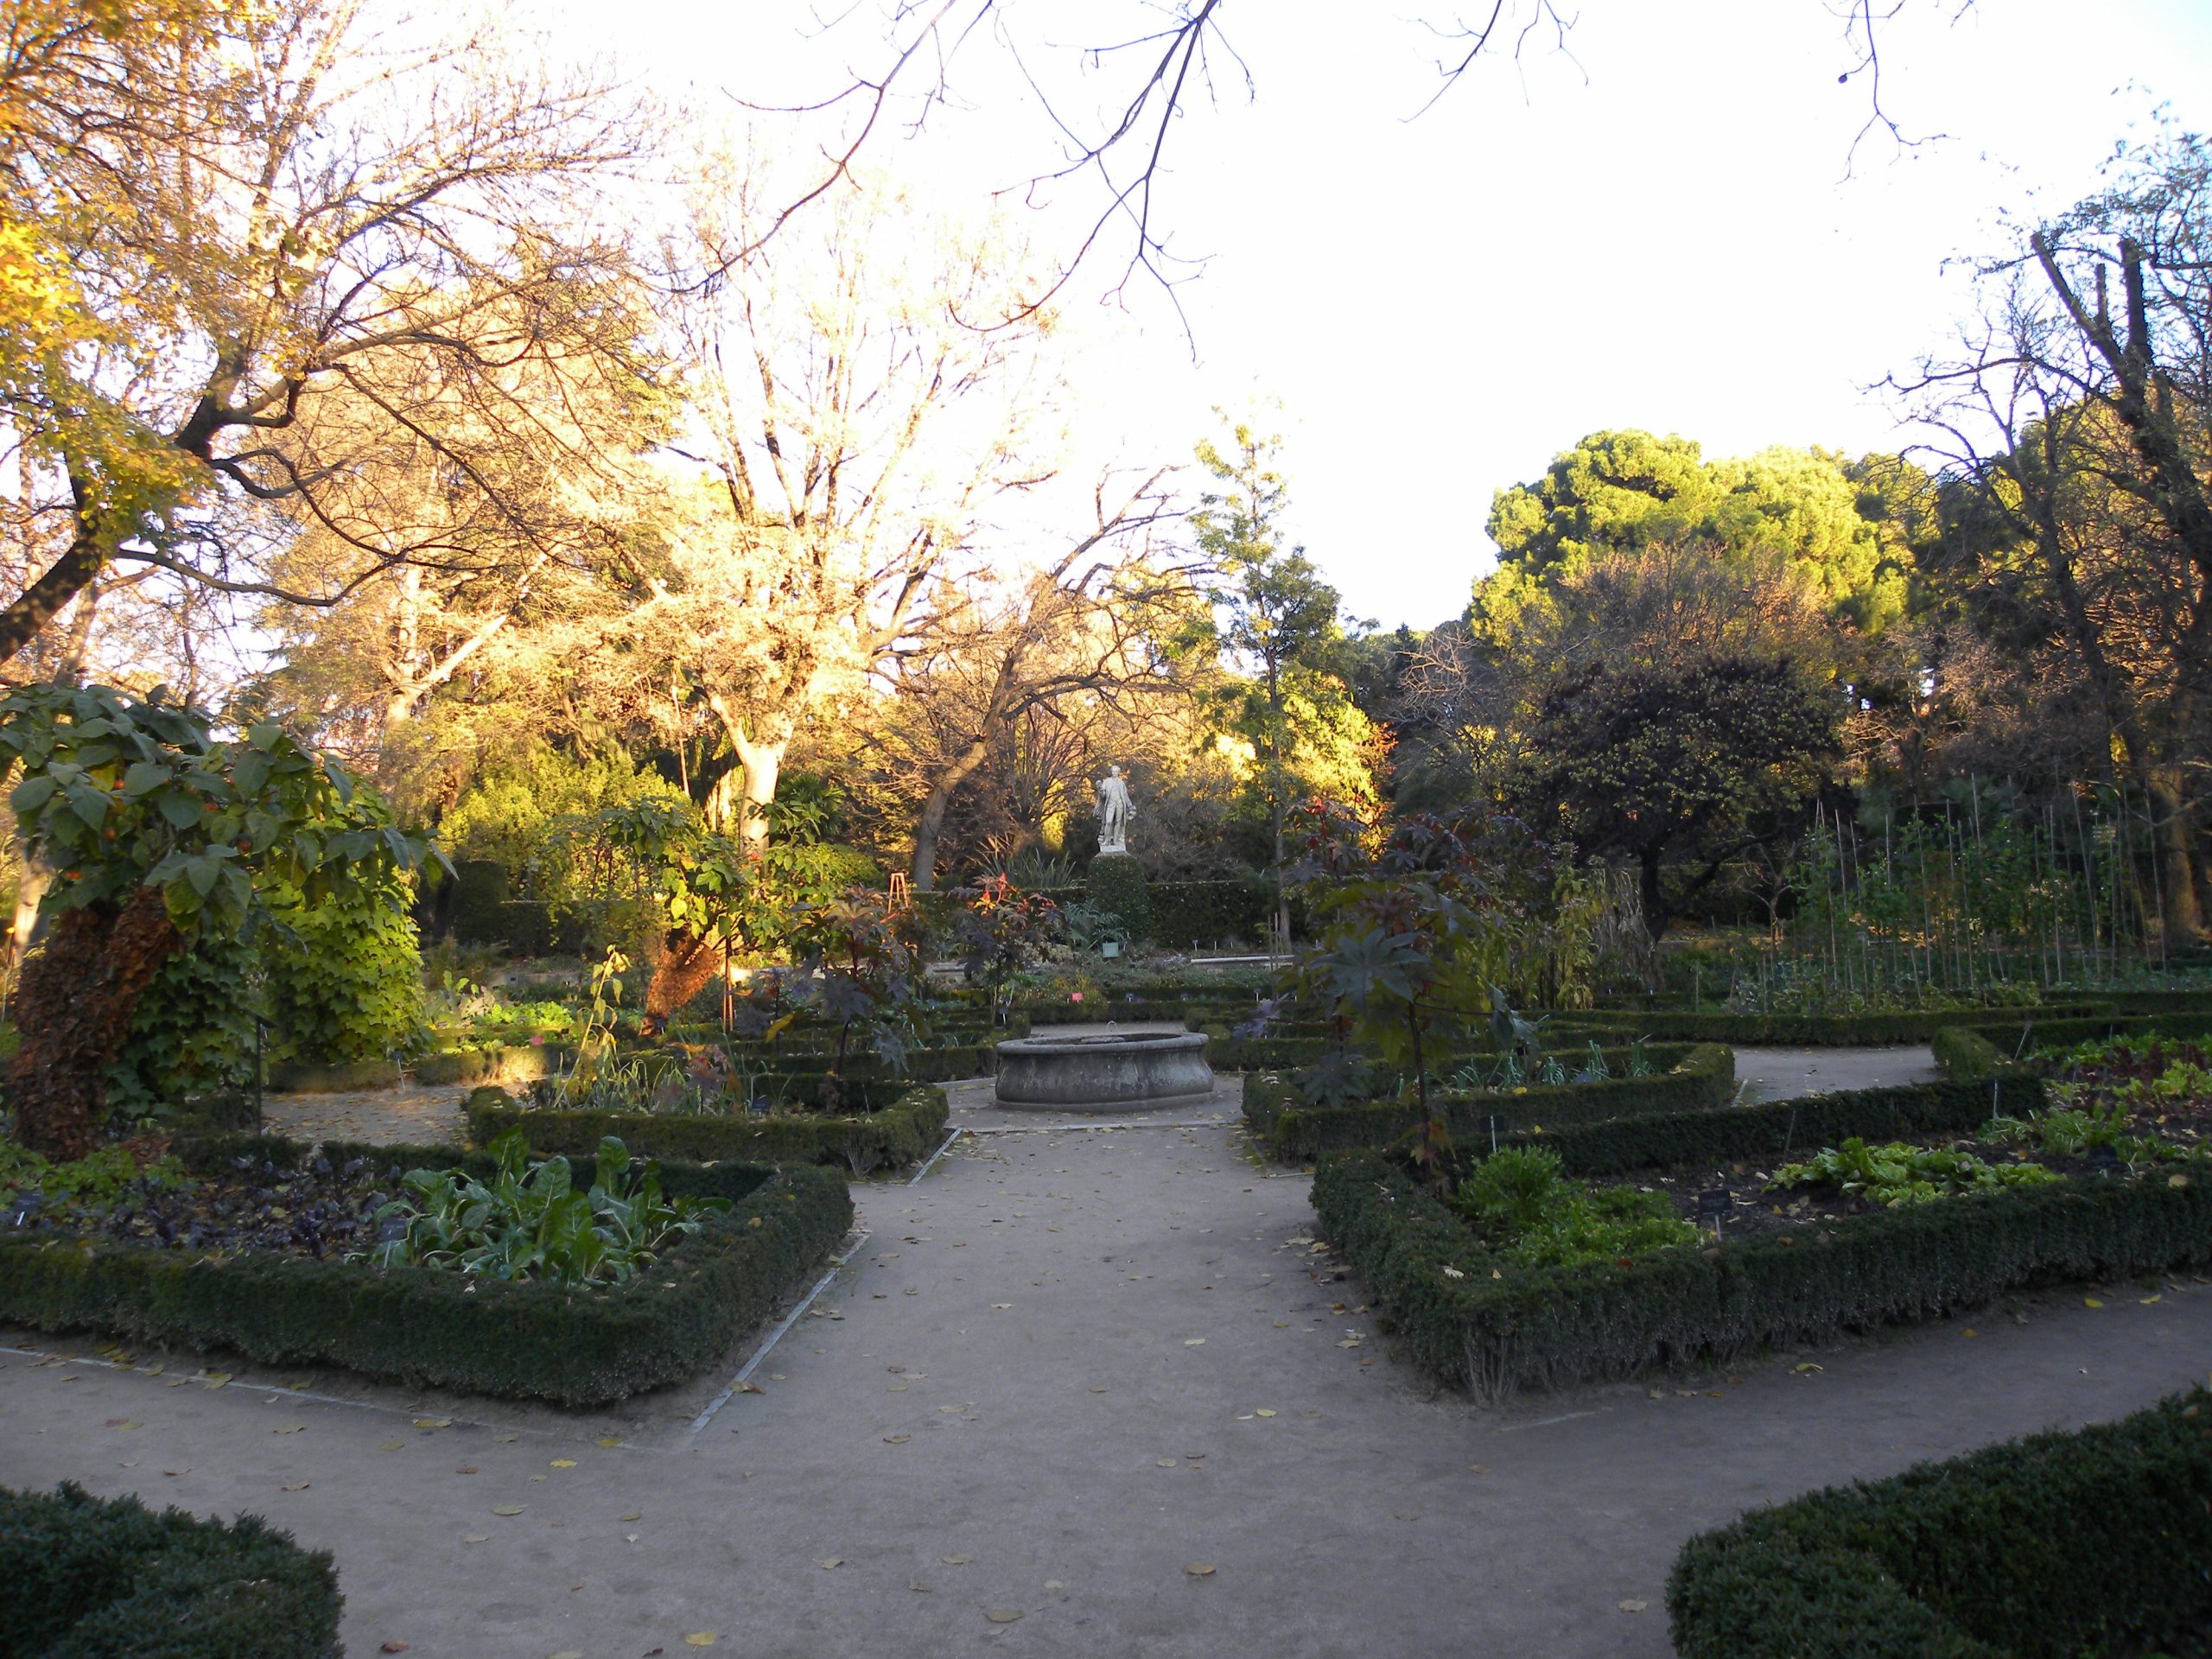 Real Jardín Botánico De Madrid | Real Jardin Botanico ... serapportantà Jardín Botanico Madrid